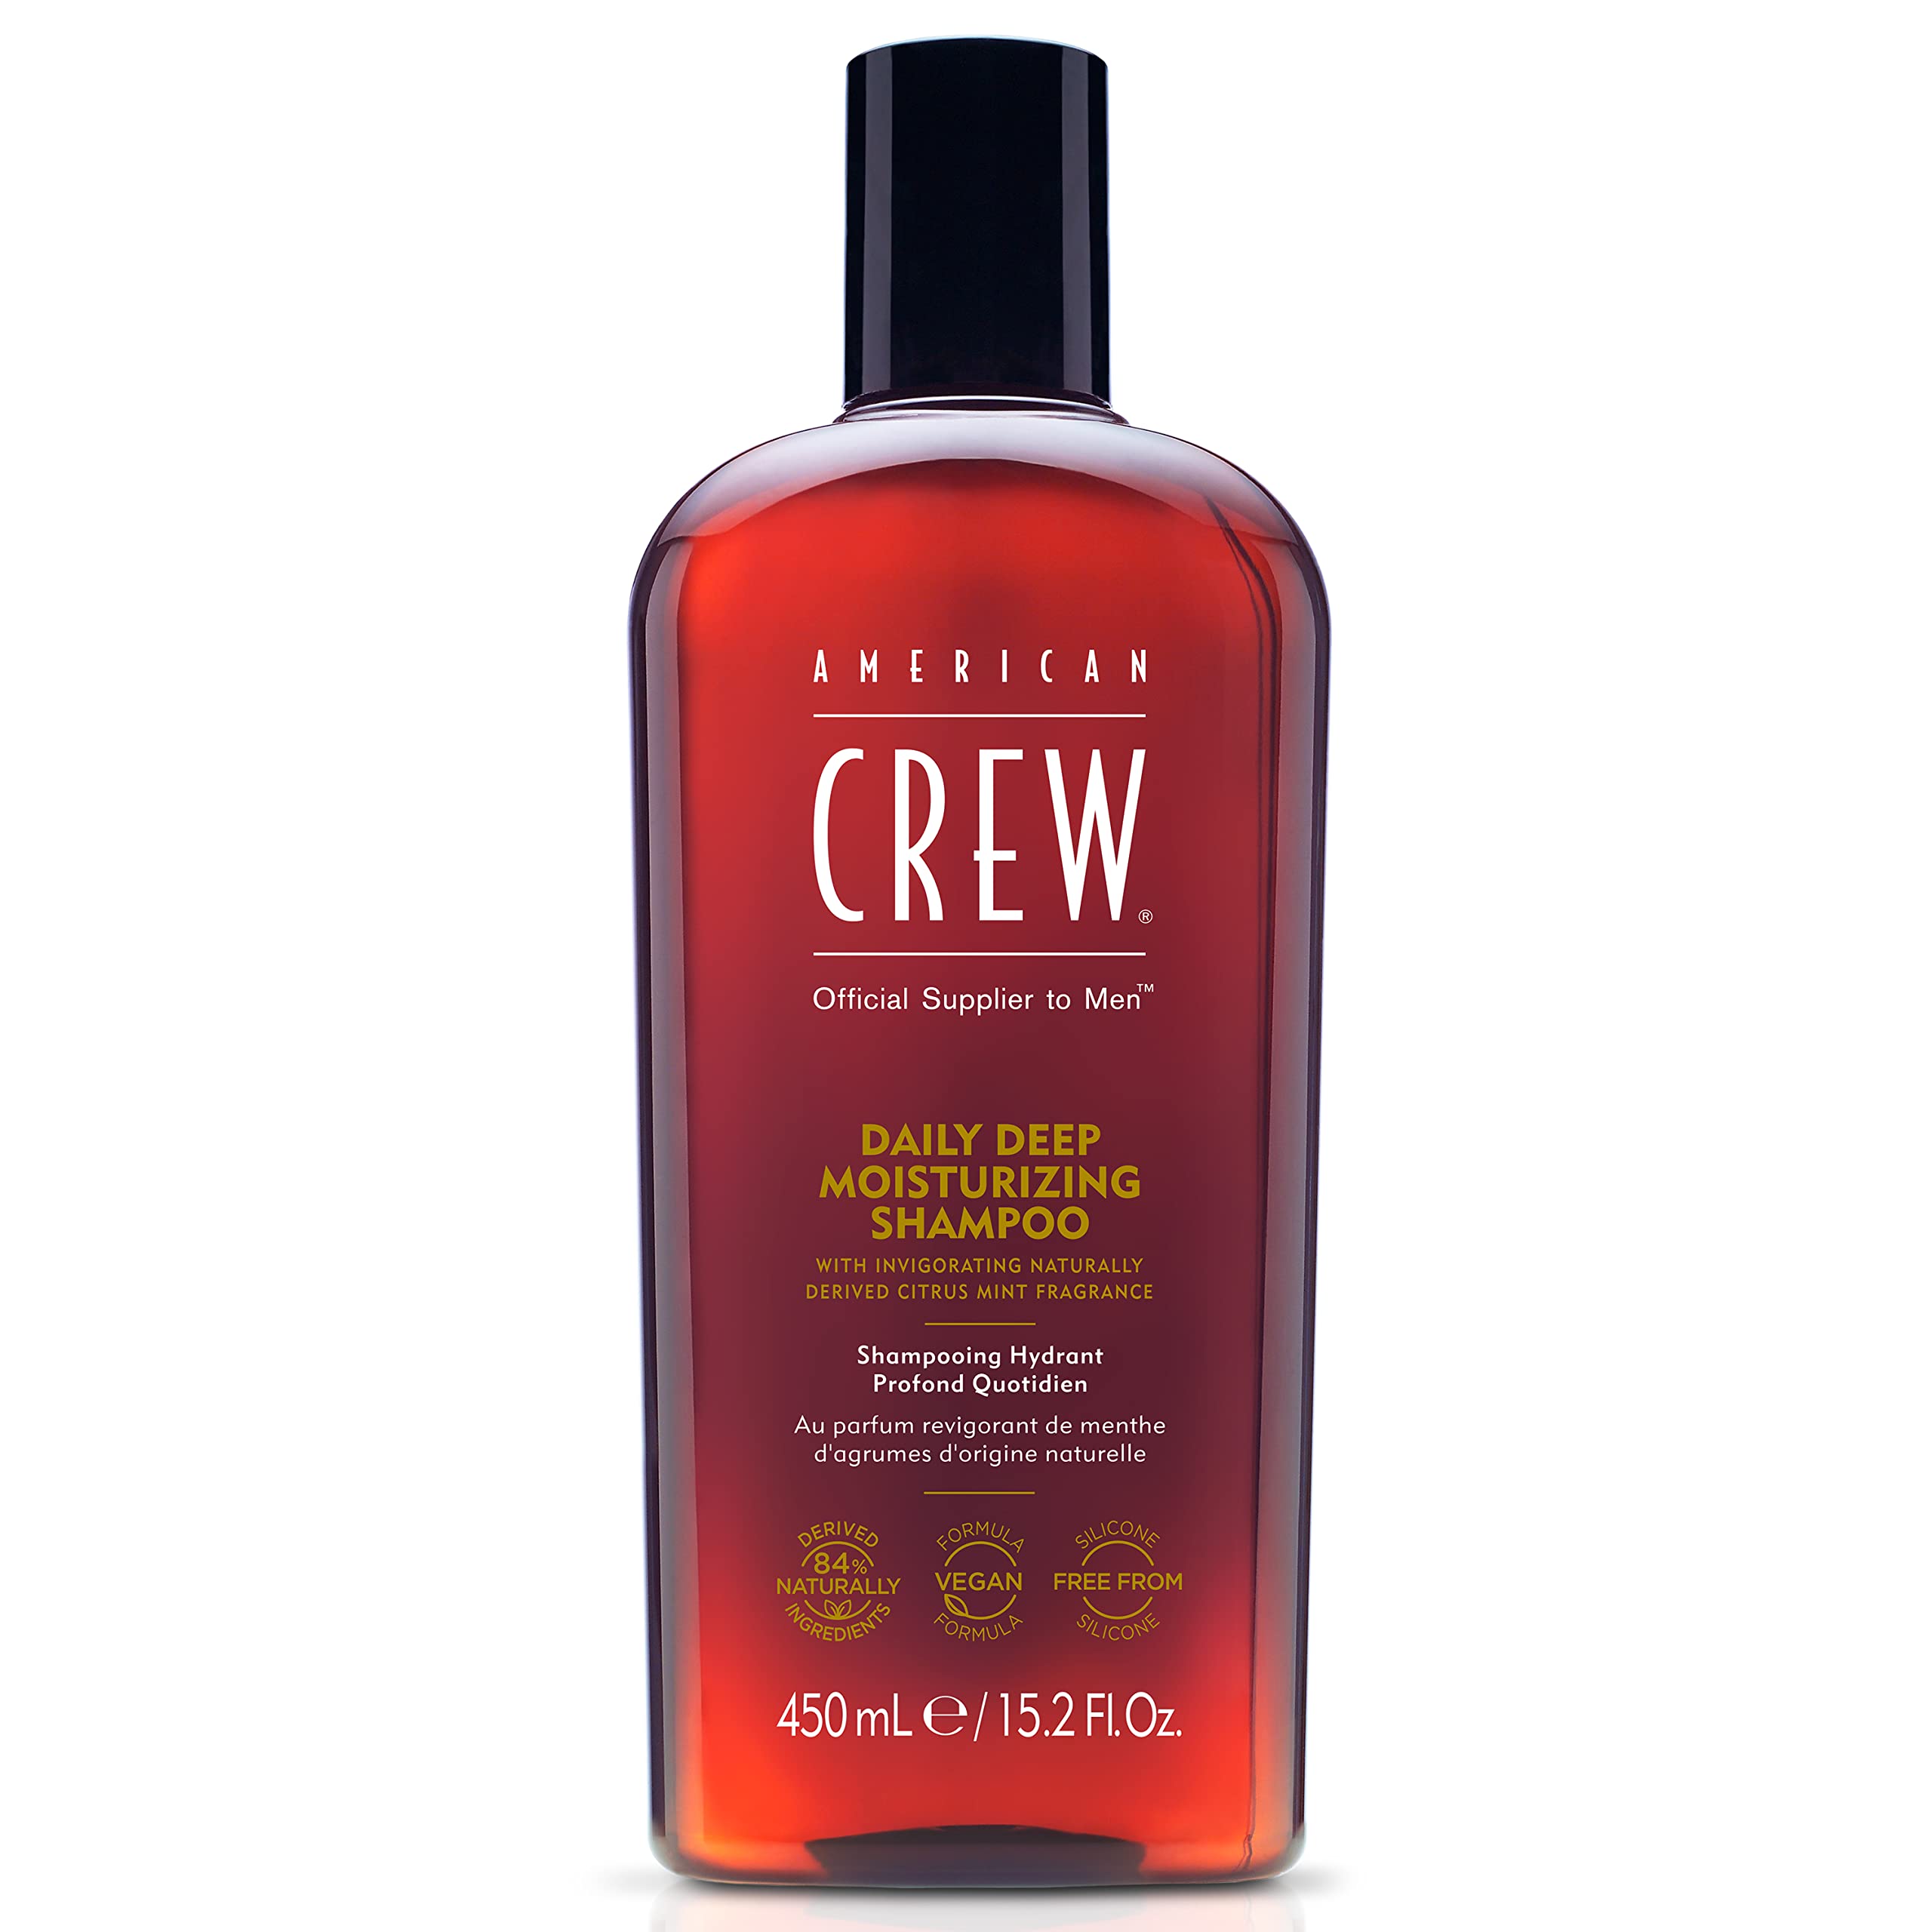 Shampoo for Men by American Crew, Daily Deep Moisturizer, Naturally Derived, Vegan Formula, Citrus Mint Fragrance, 15.2 Fl Oz